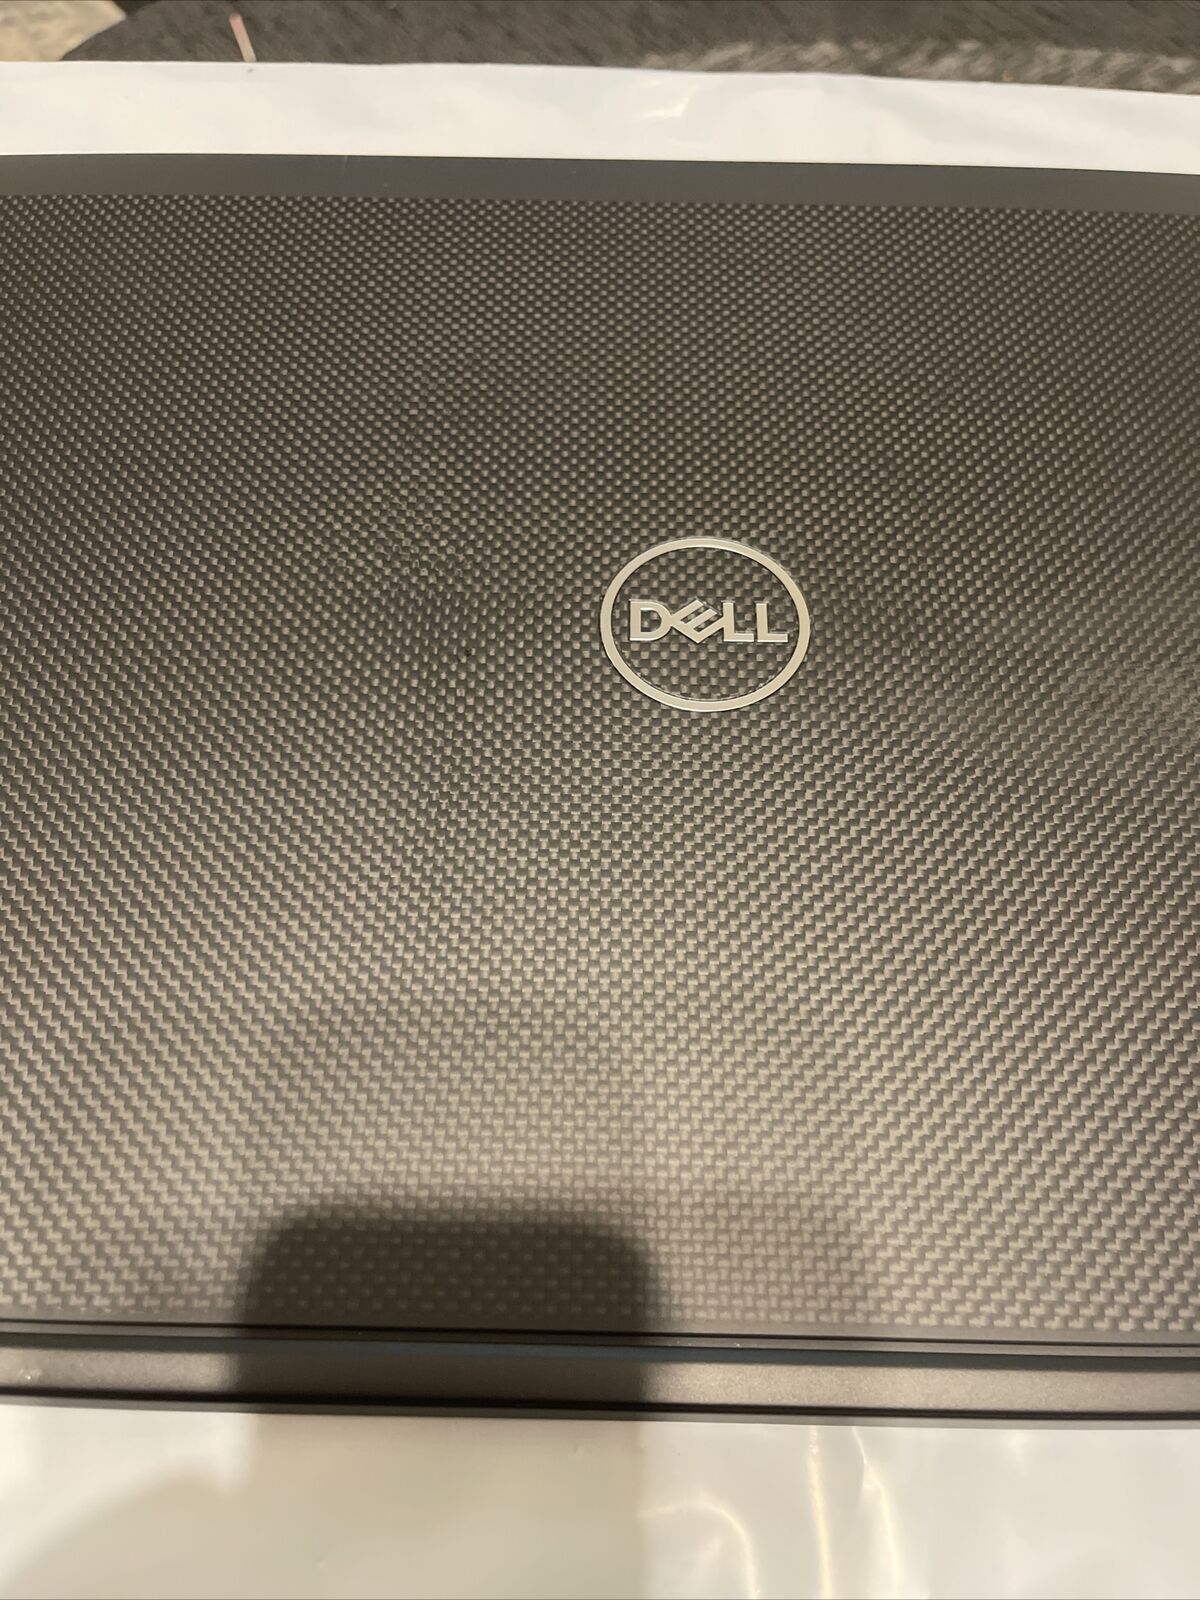 Dell Precision 7740 17.3" Laptop LCD Back Cover Lid Assembly HUB02 FPJN7 B9